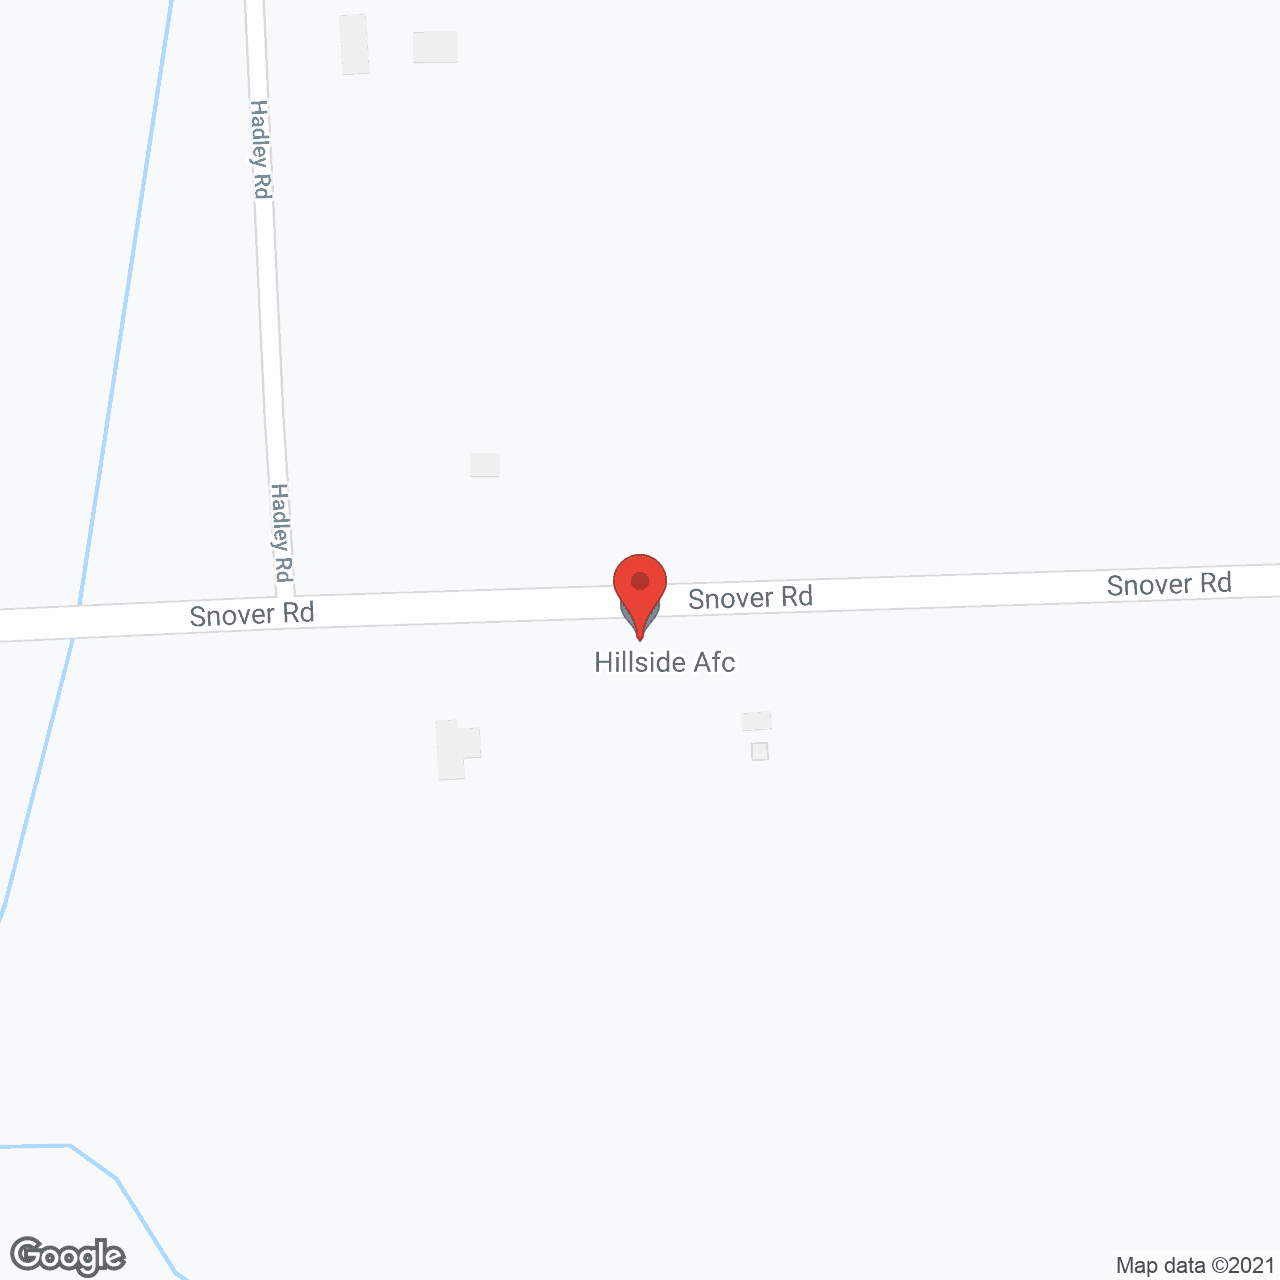 Hillside AFC in google map